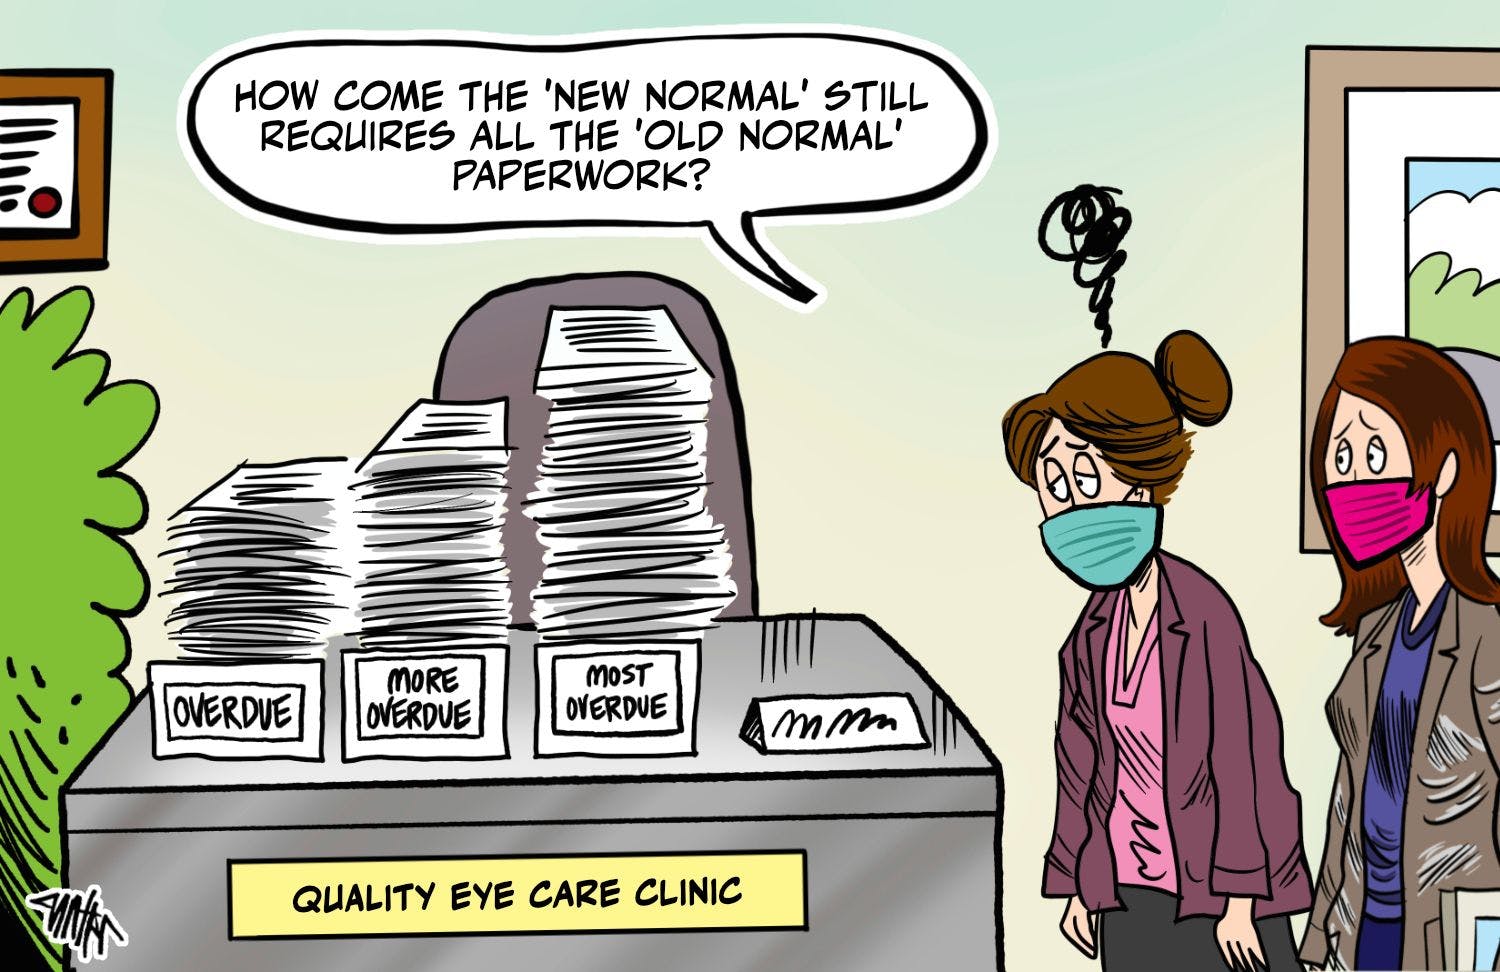 Optic relief: Old normal paperwork